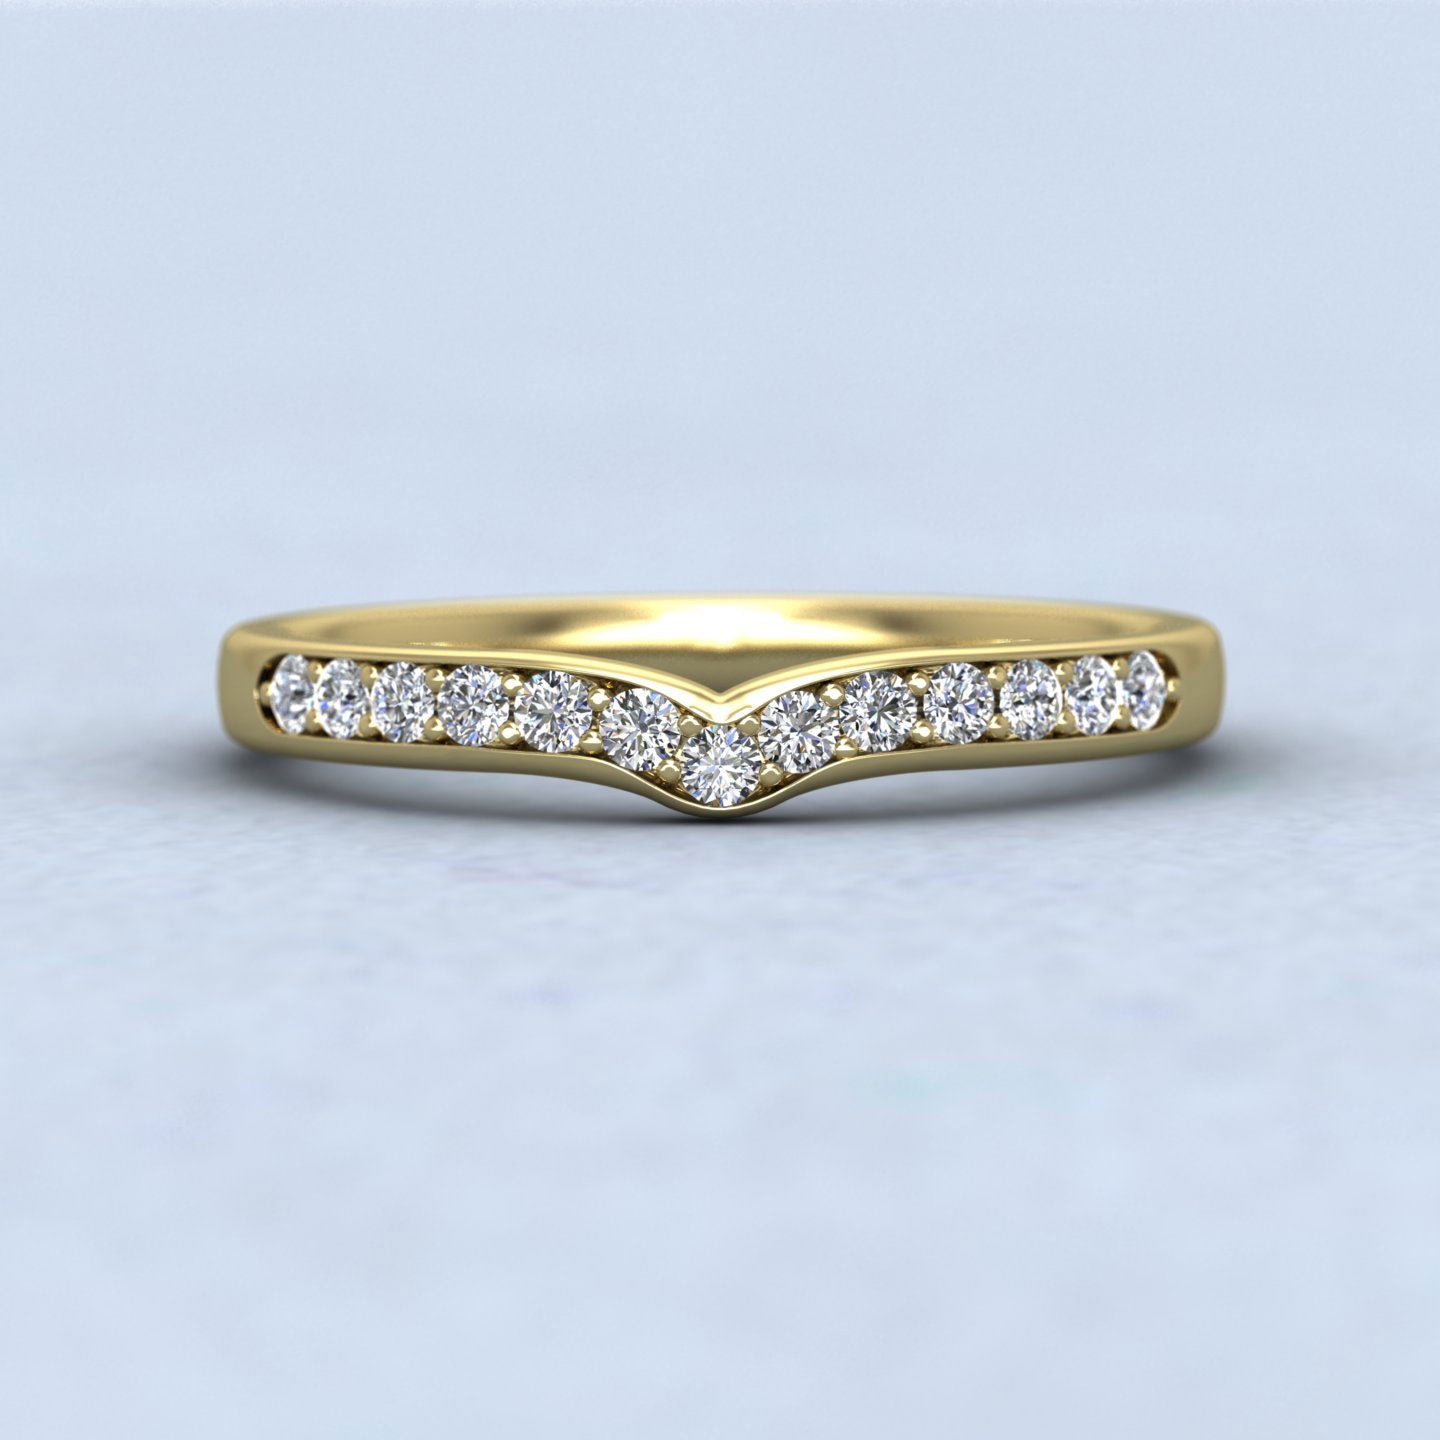 Slight Wishbone Shaped Bead Set Diamond Wedding Ring In 9ct Yellow Gold 2.25mm Wide